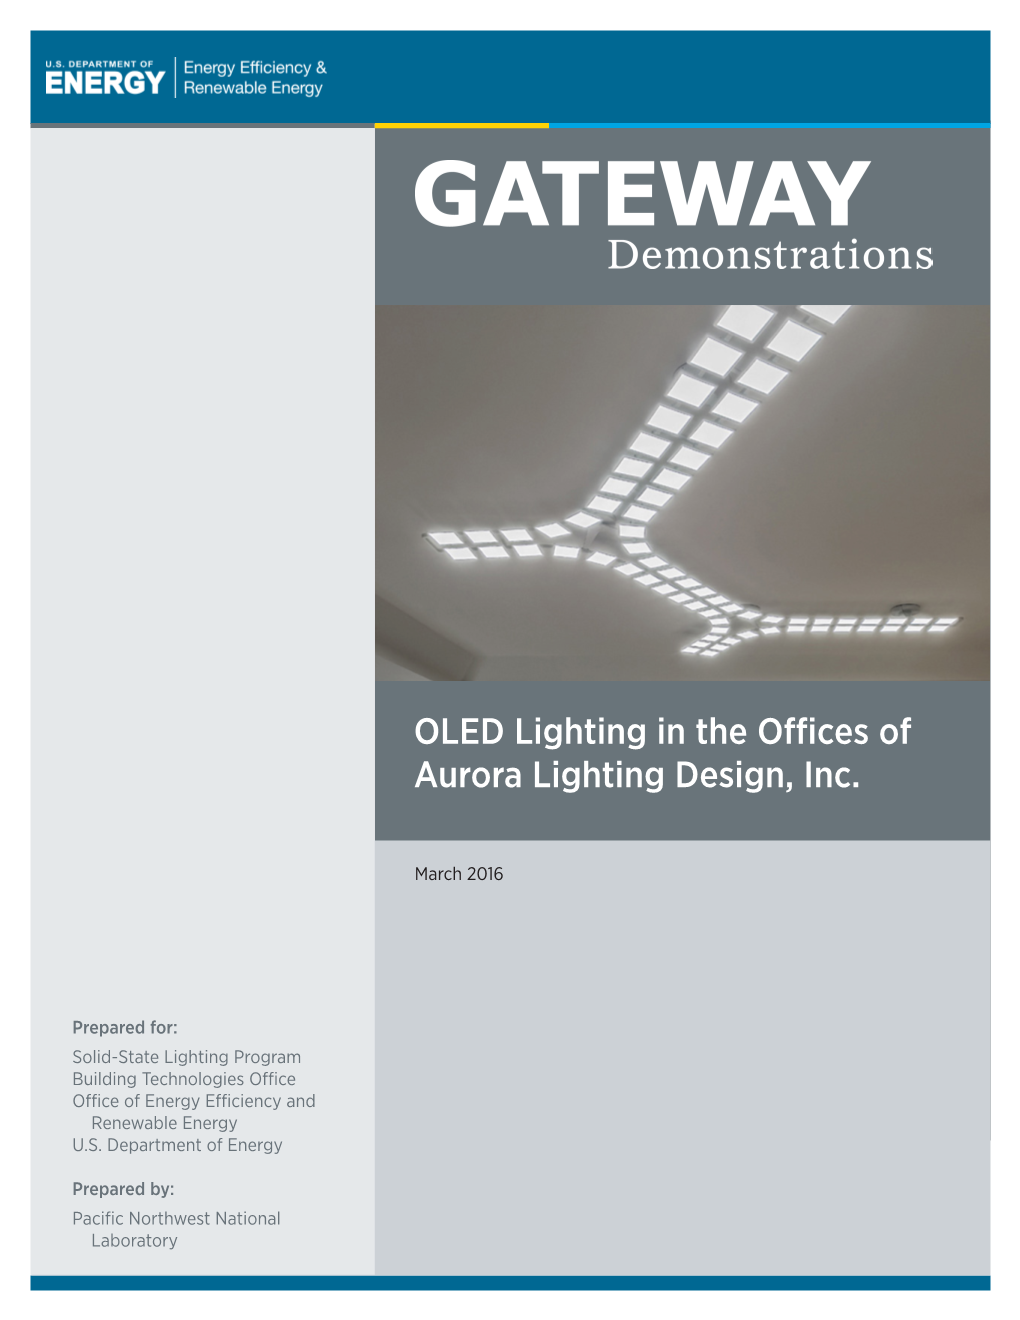 GATEWAY Demonstrations: OLED Lighting in the Offices of Aurora Lighting Design, Inc